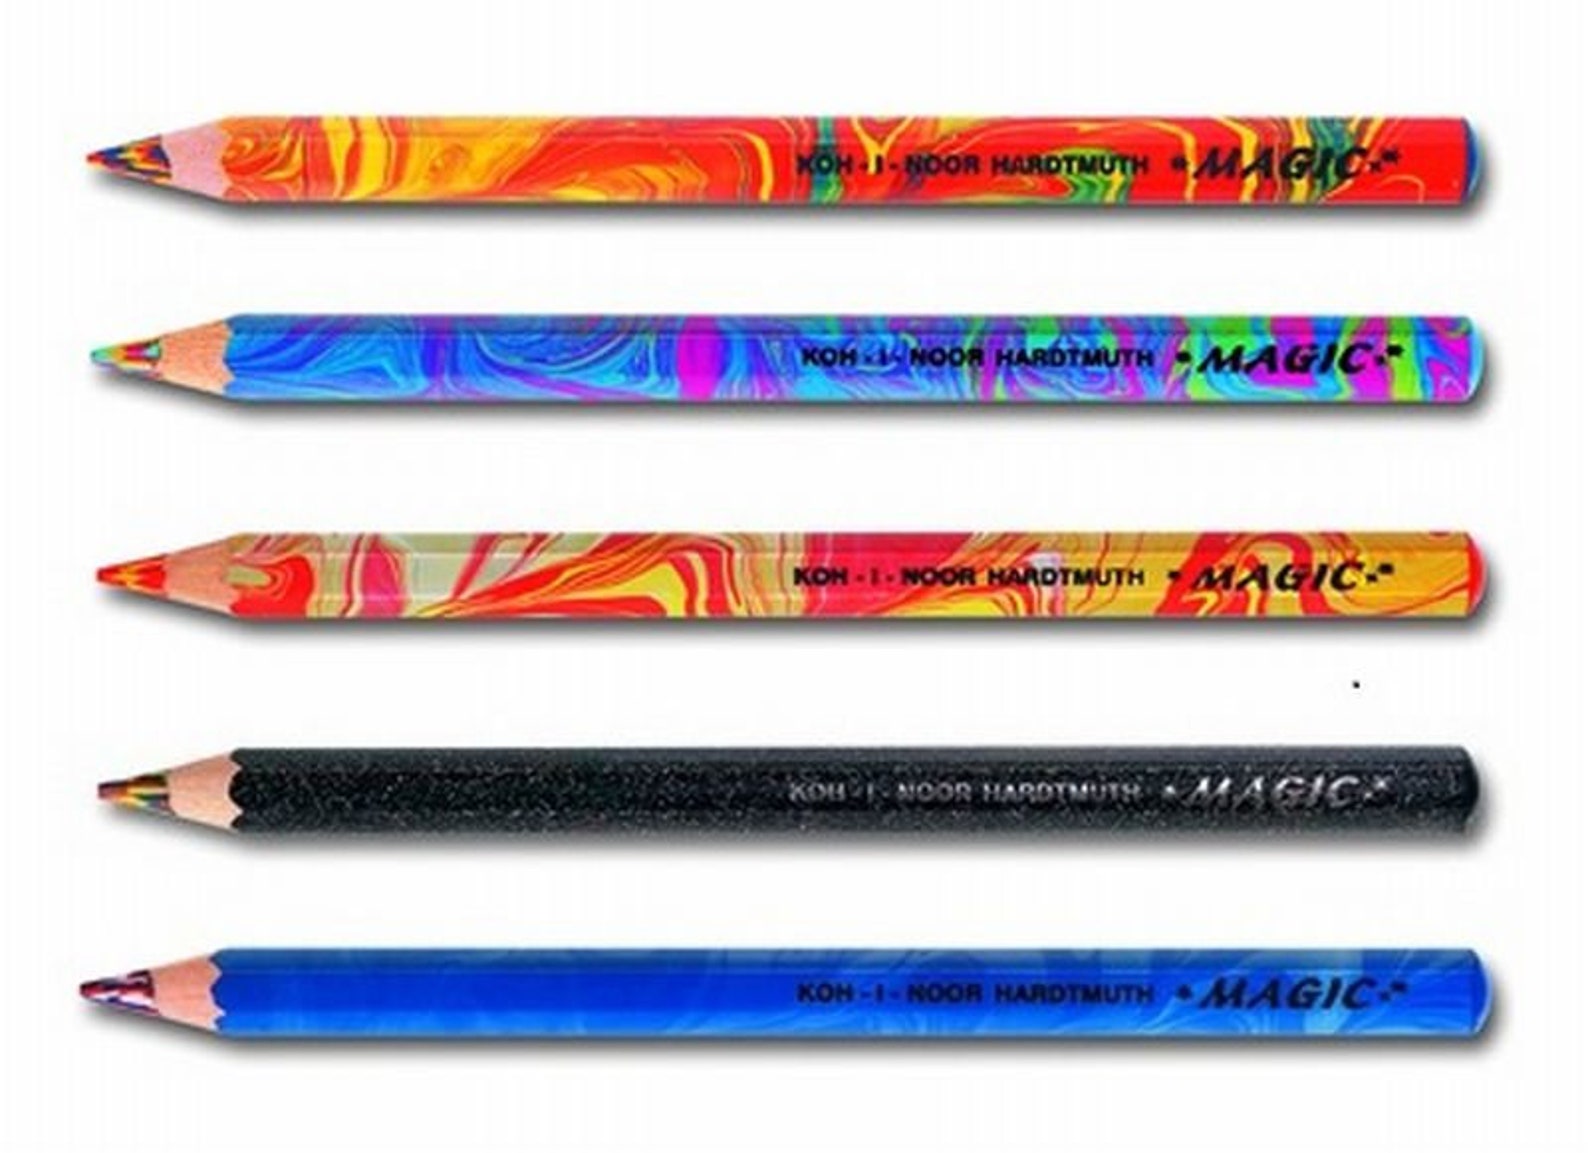 Magic pencil. Карандаши Koh-i-Noor Hardtmuth Magic. Koh-i-Noor Progresso Magic. Jumbo Pencils Kohi Noor карандаши. Koh i Noor Multicoloured Pencils.